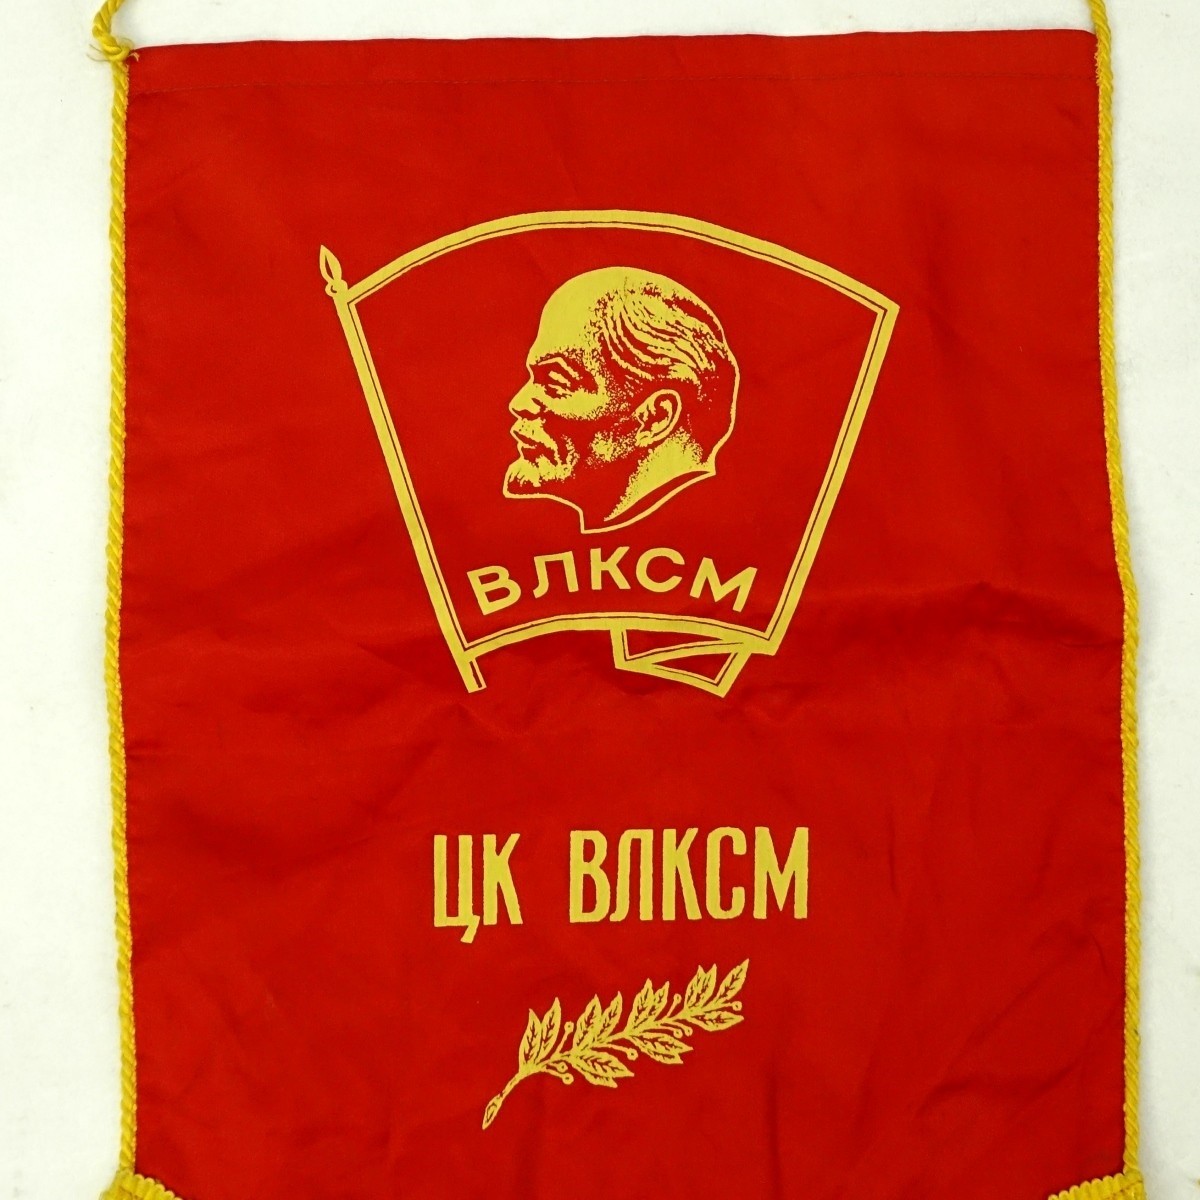 Four Soviet Era Propaganda Items